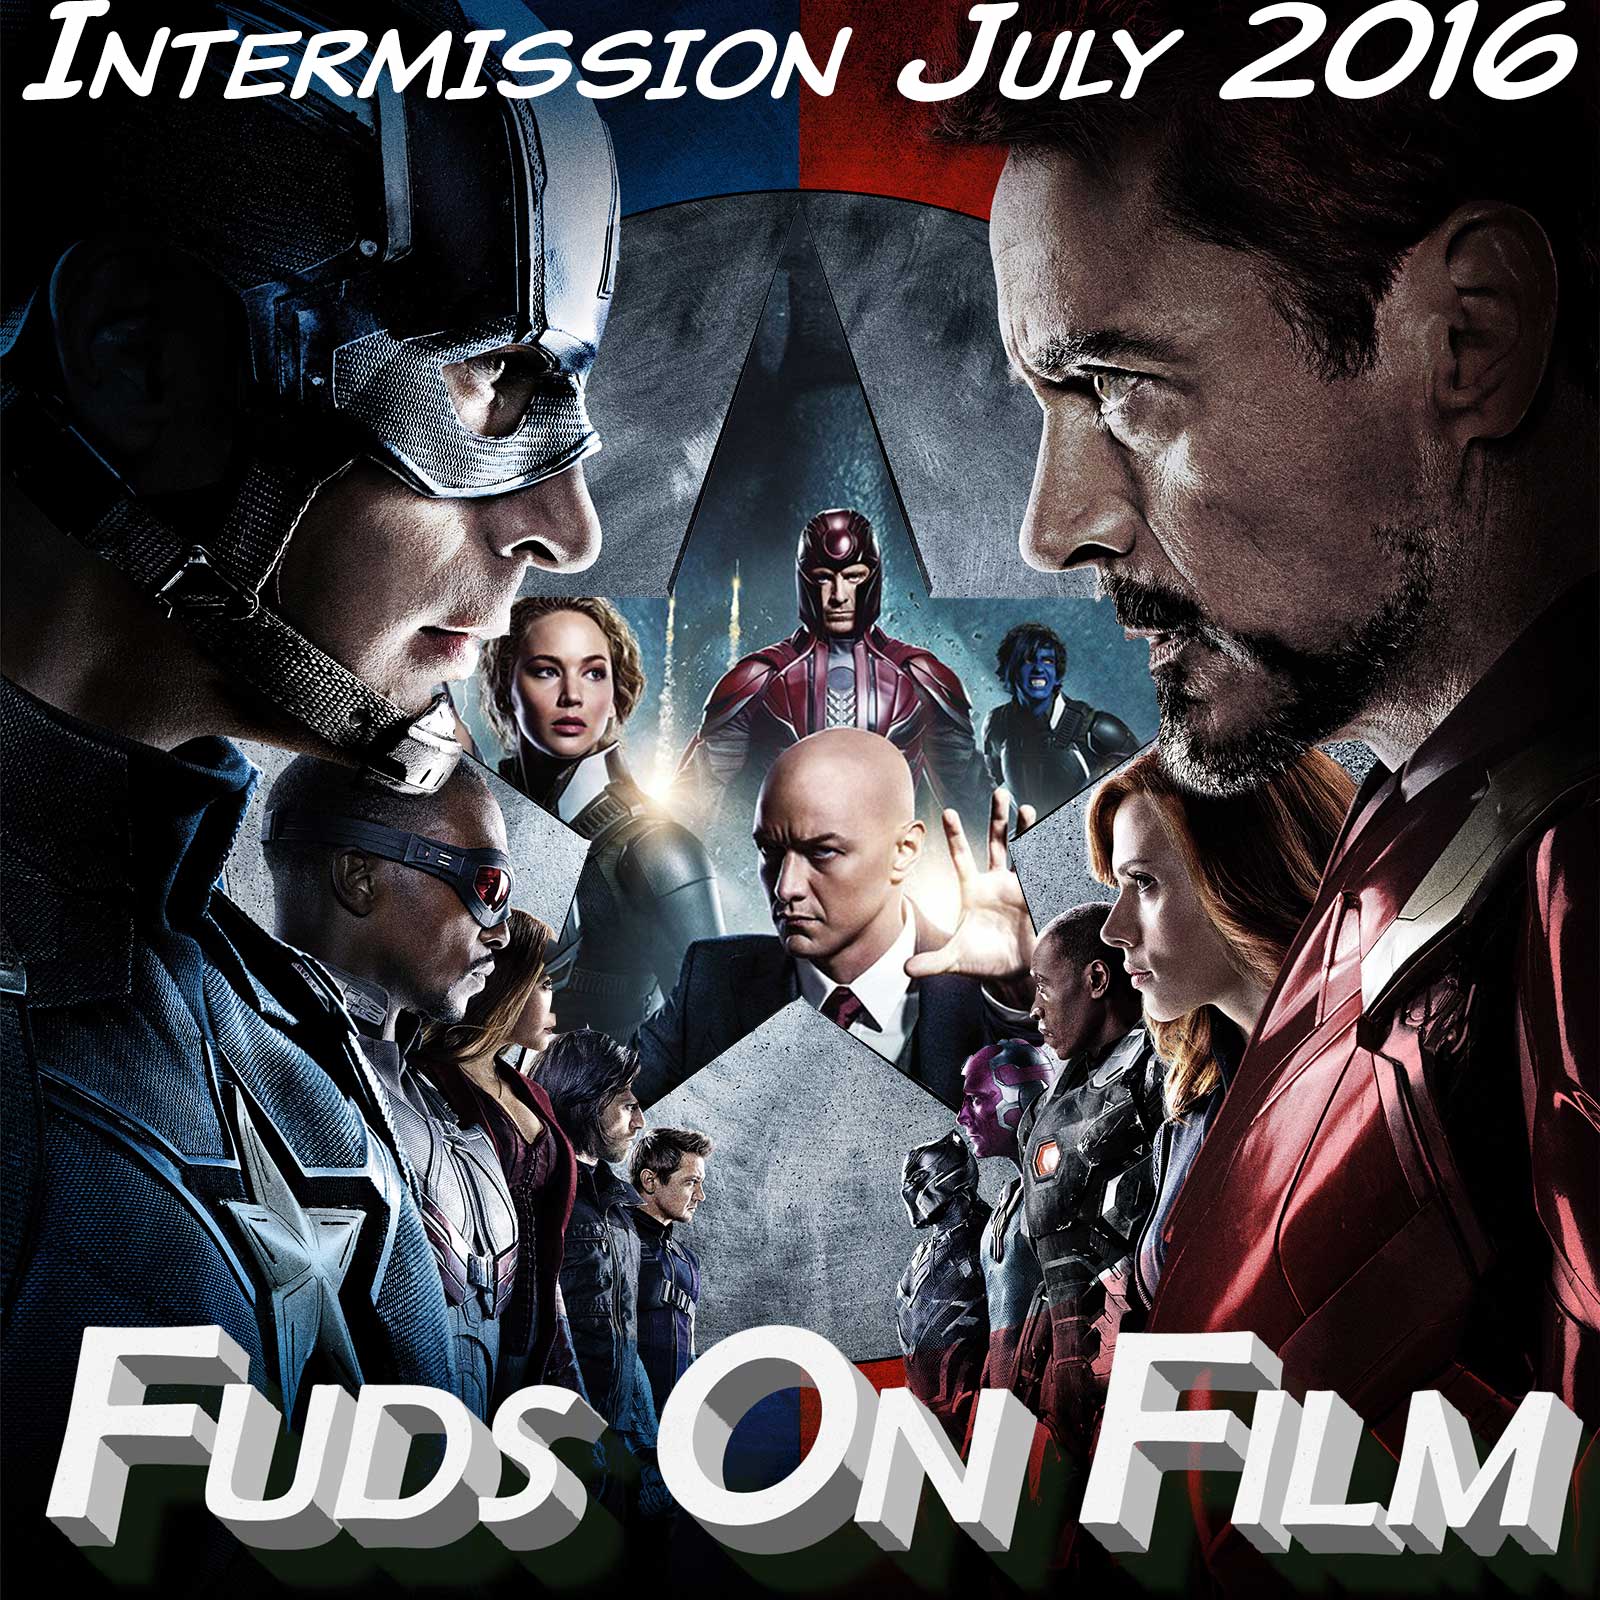 themes in intermission film